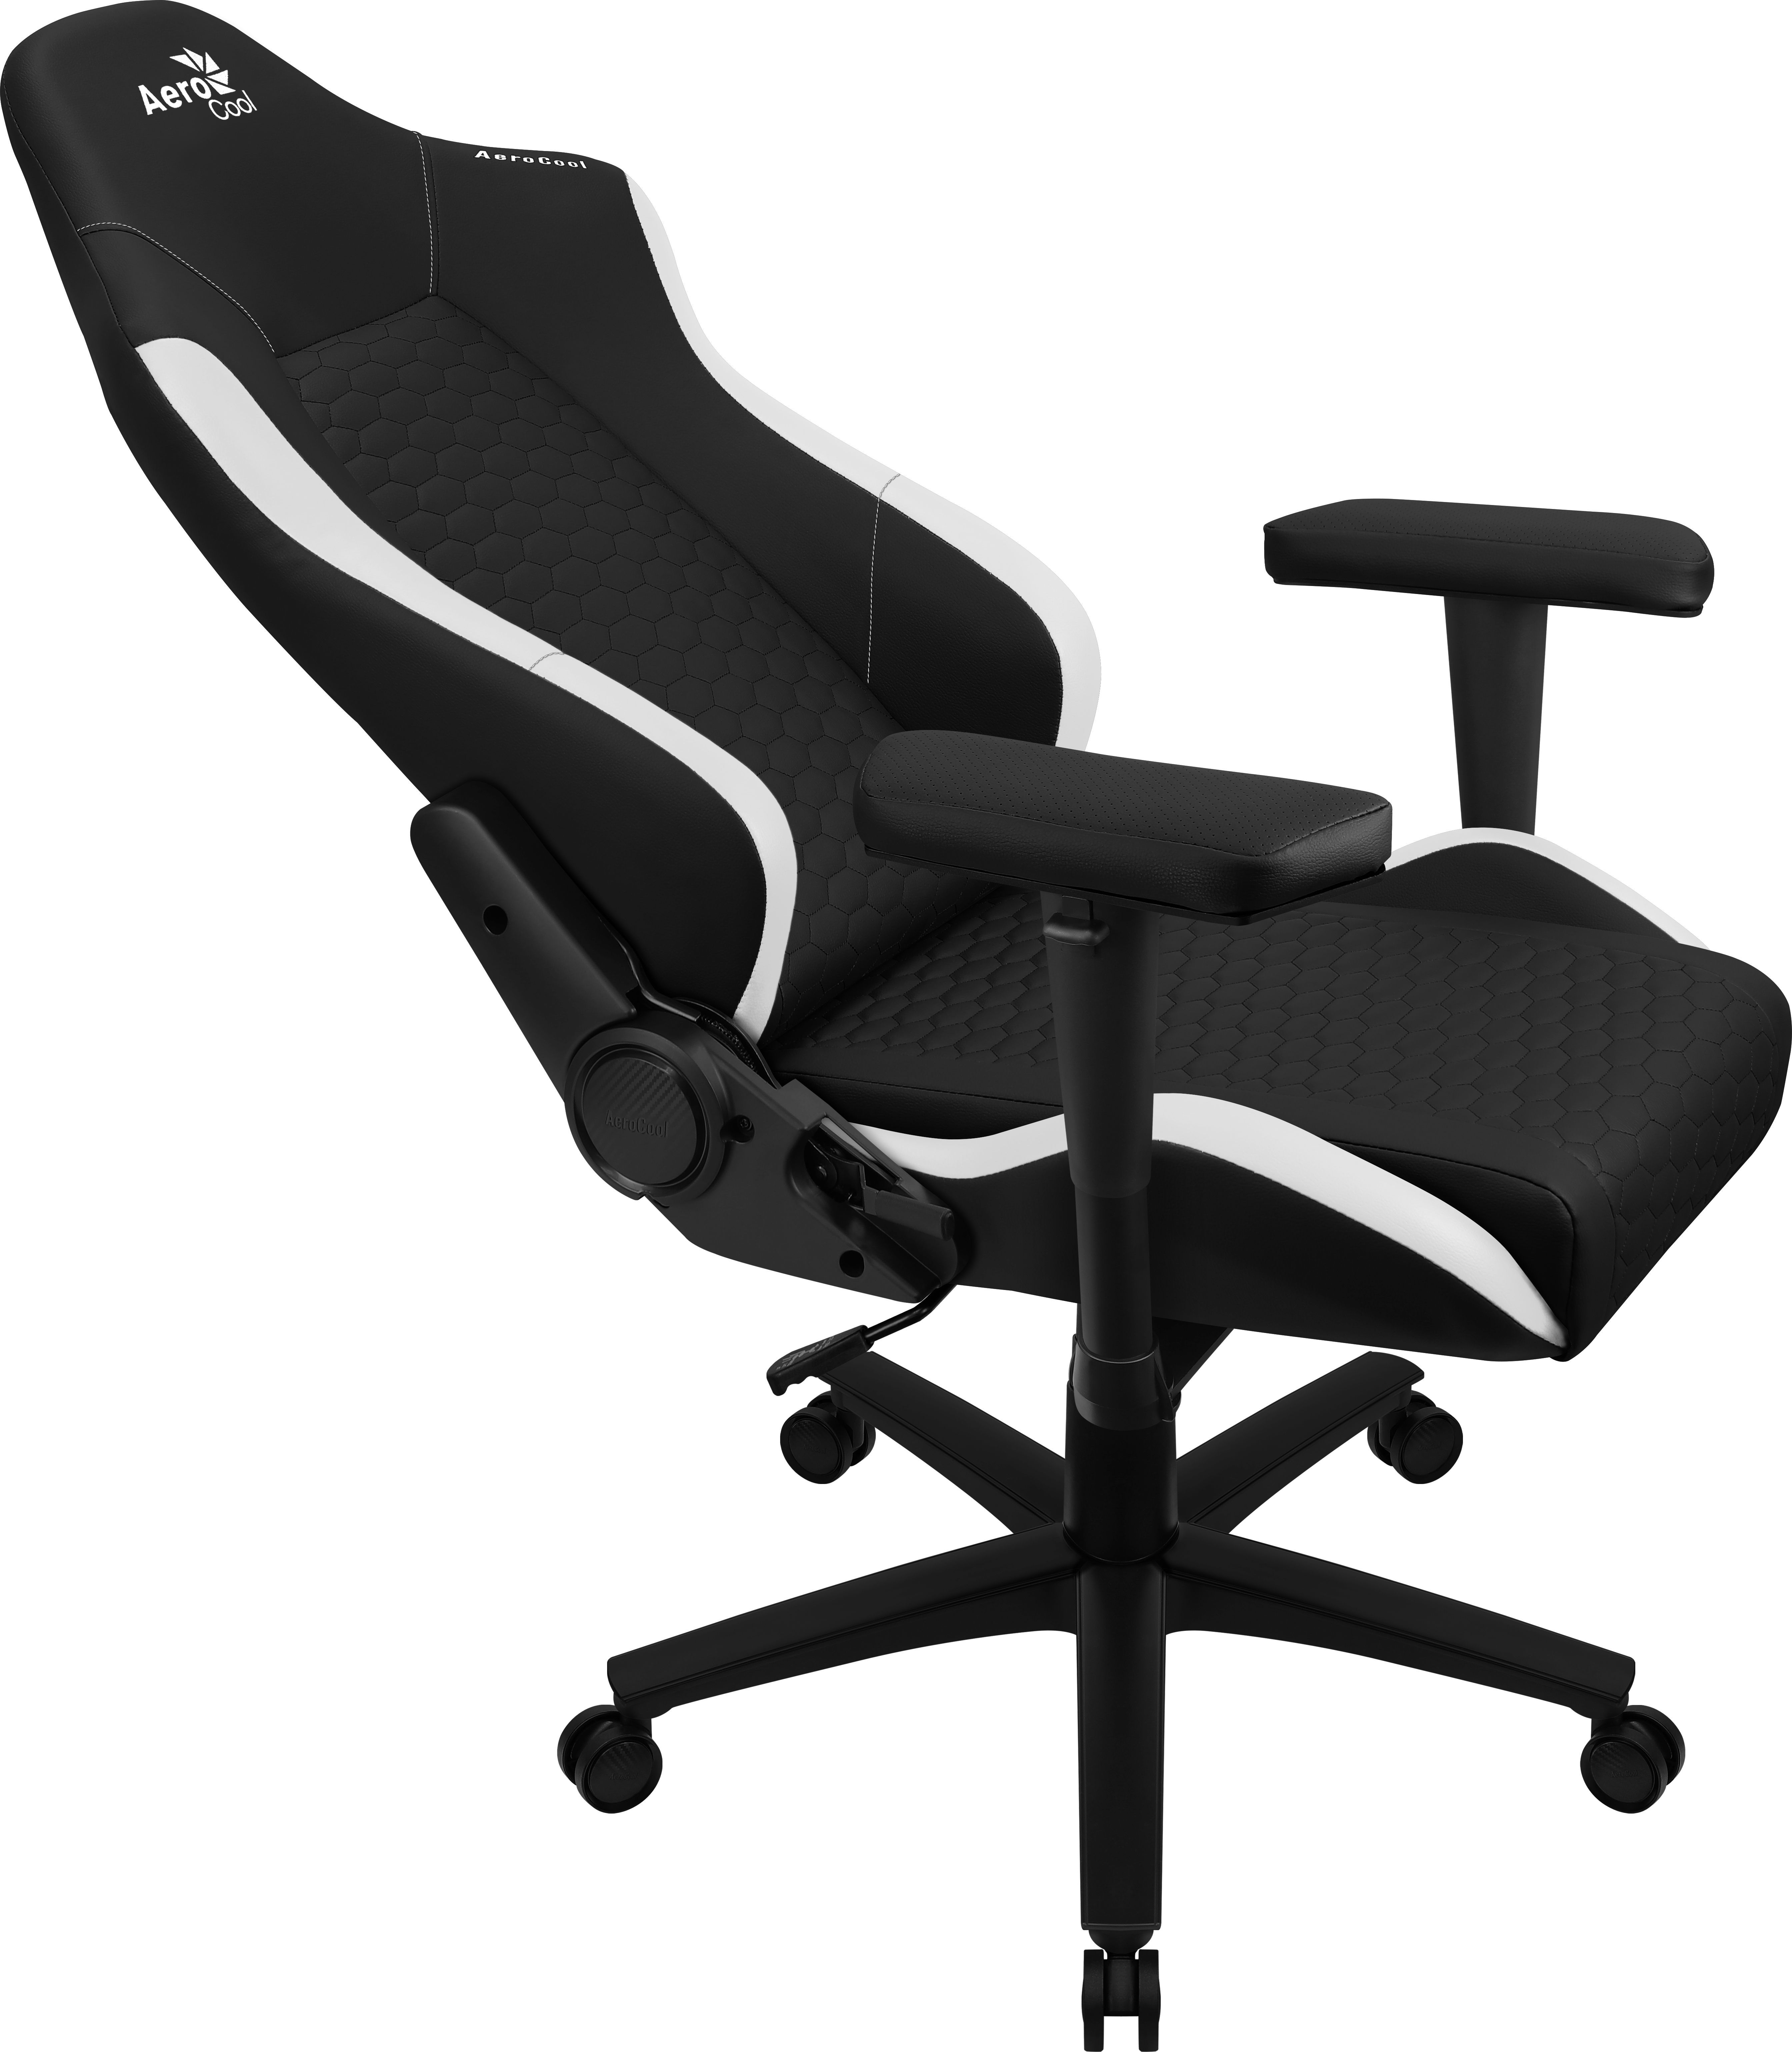 Aerocool - Aerocool Crown Nobility Series Gaming Chair - Black/White